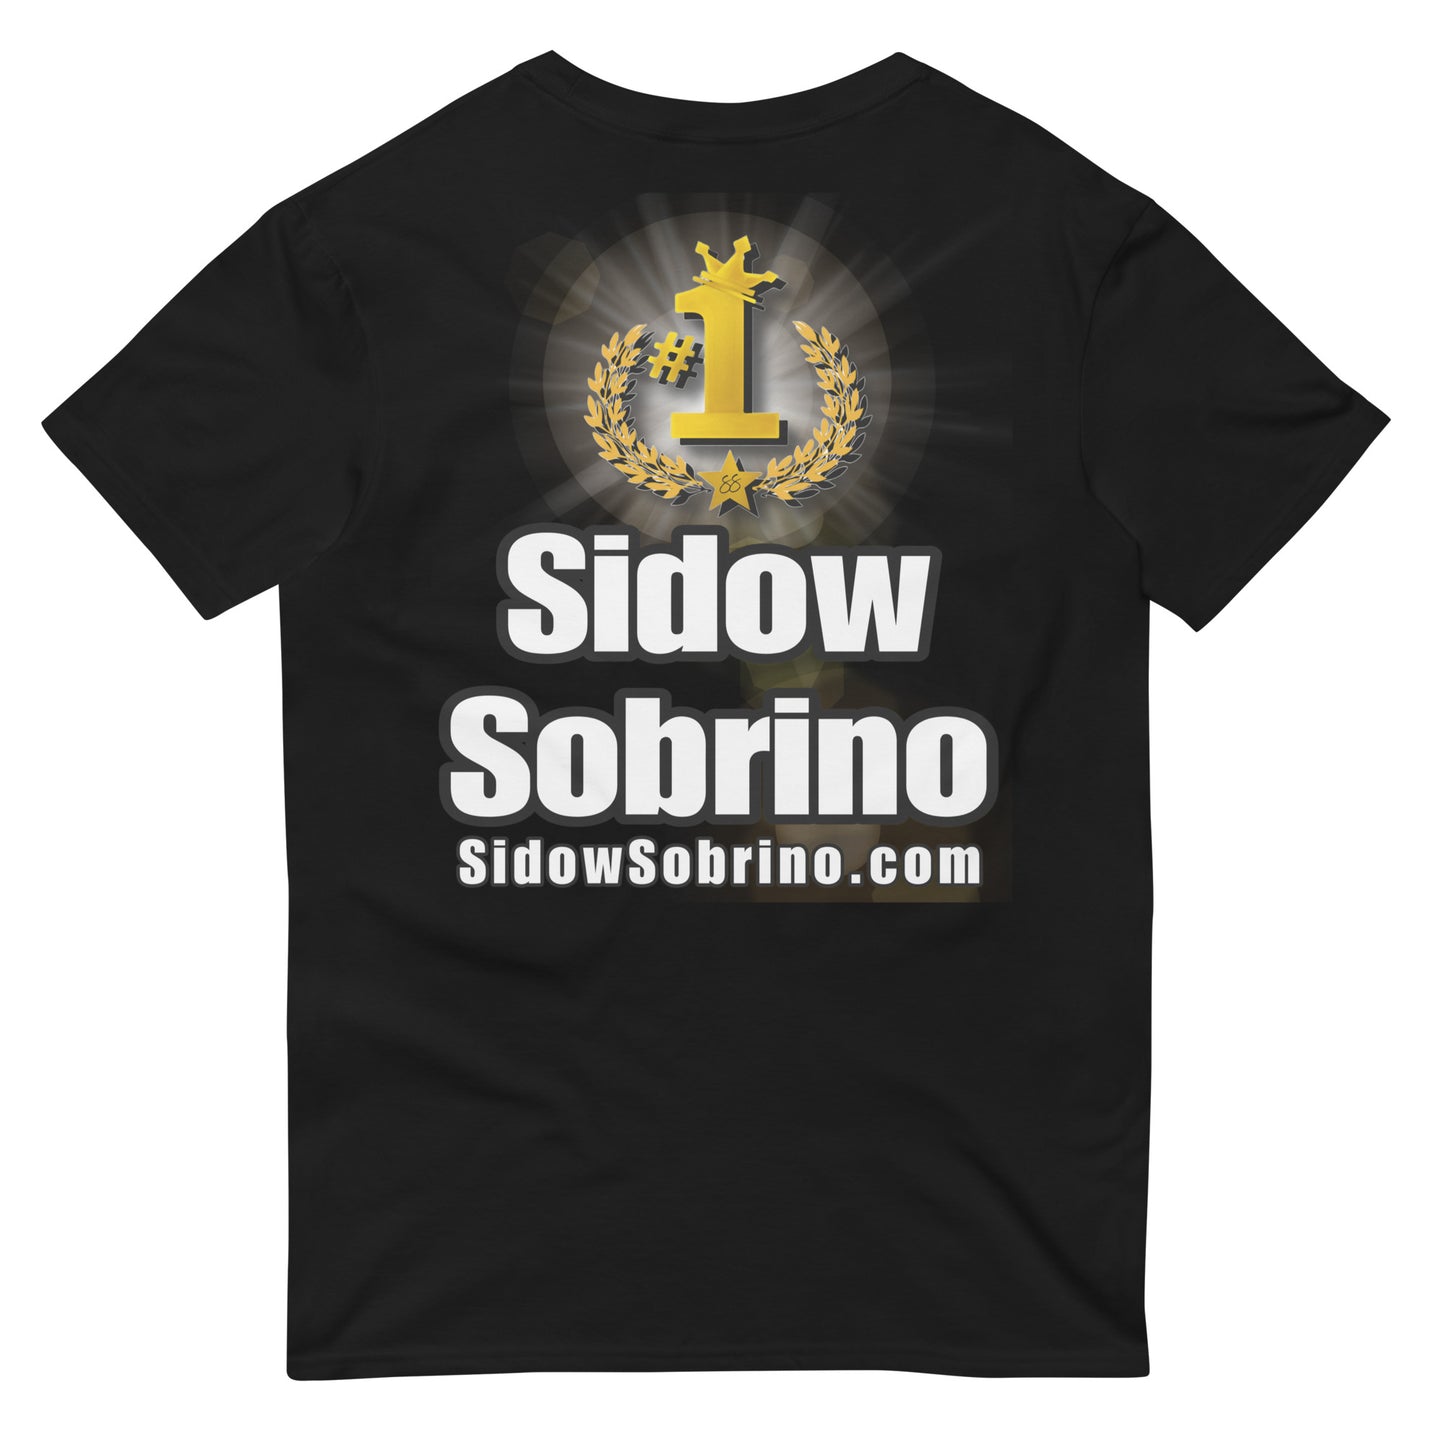 Official Sidow Sobrino - The World's No.1 Superstar Black Short-Sleeve T-Shirt